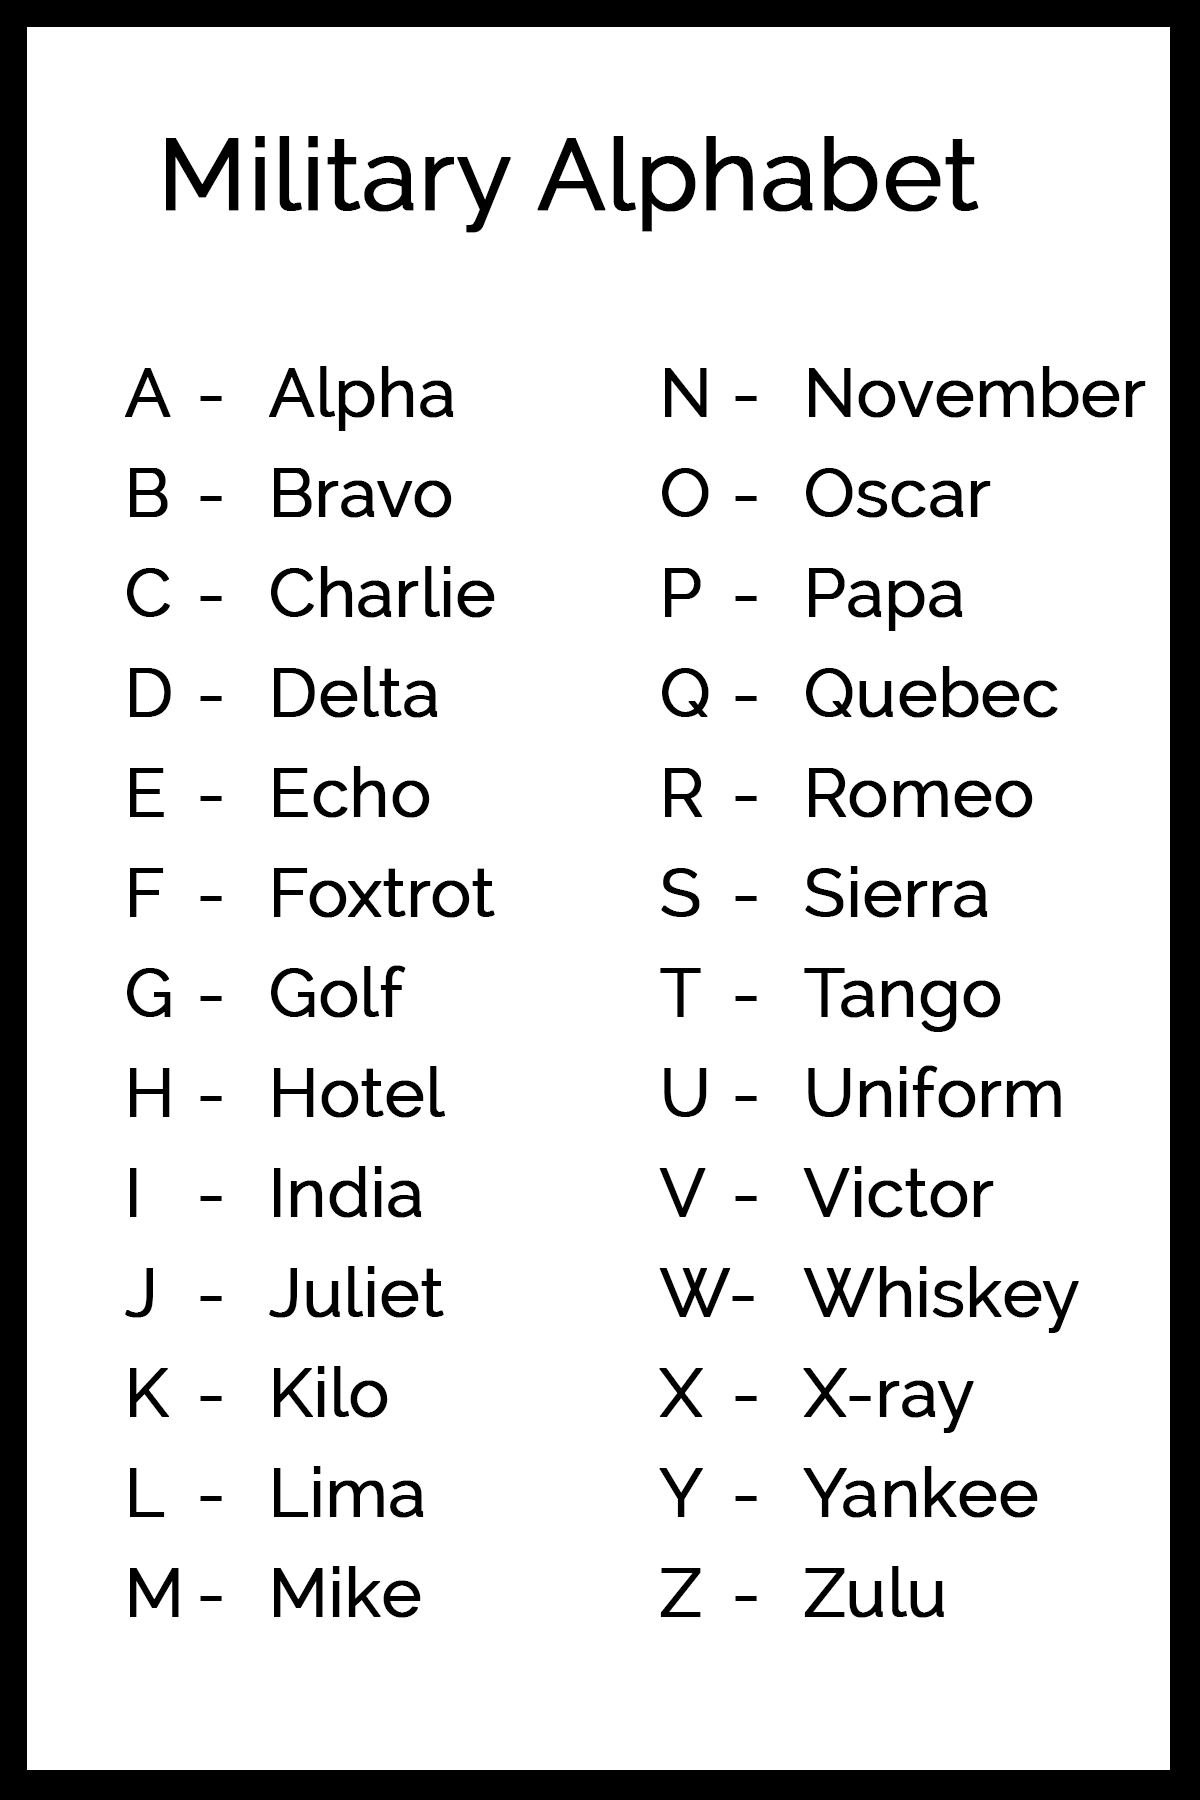 Military Phonetic Alphabet | Military Alphabet